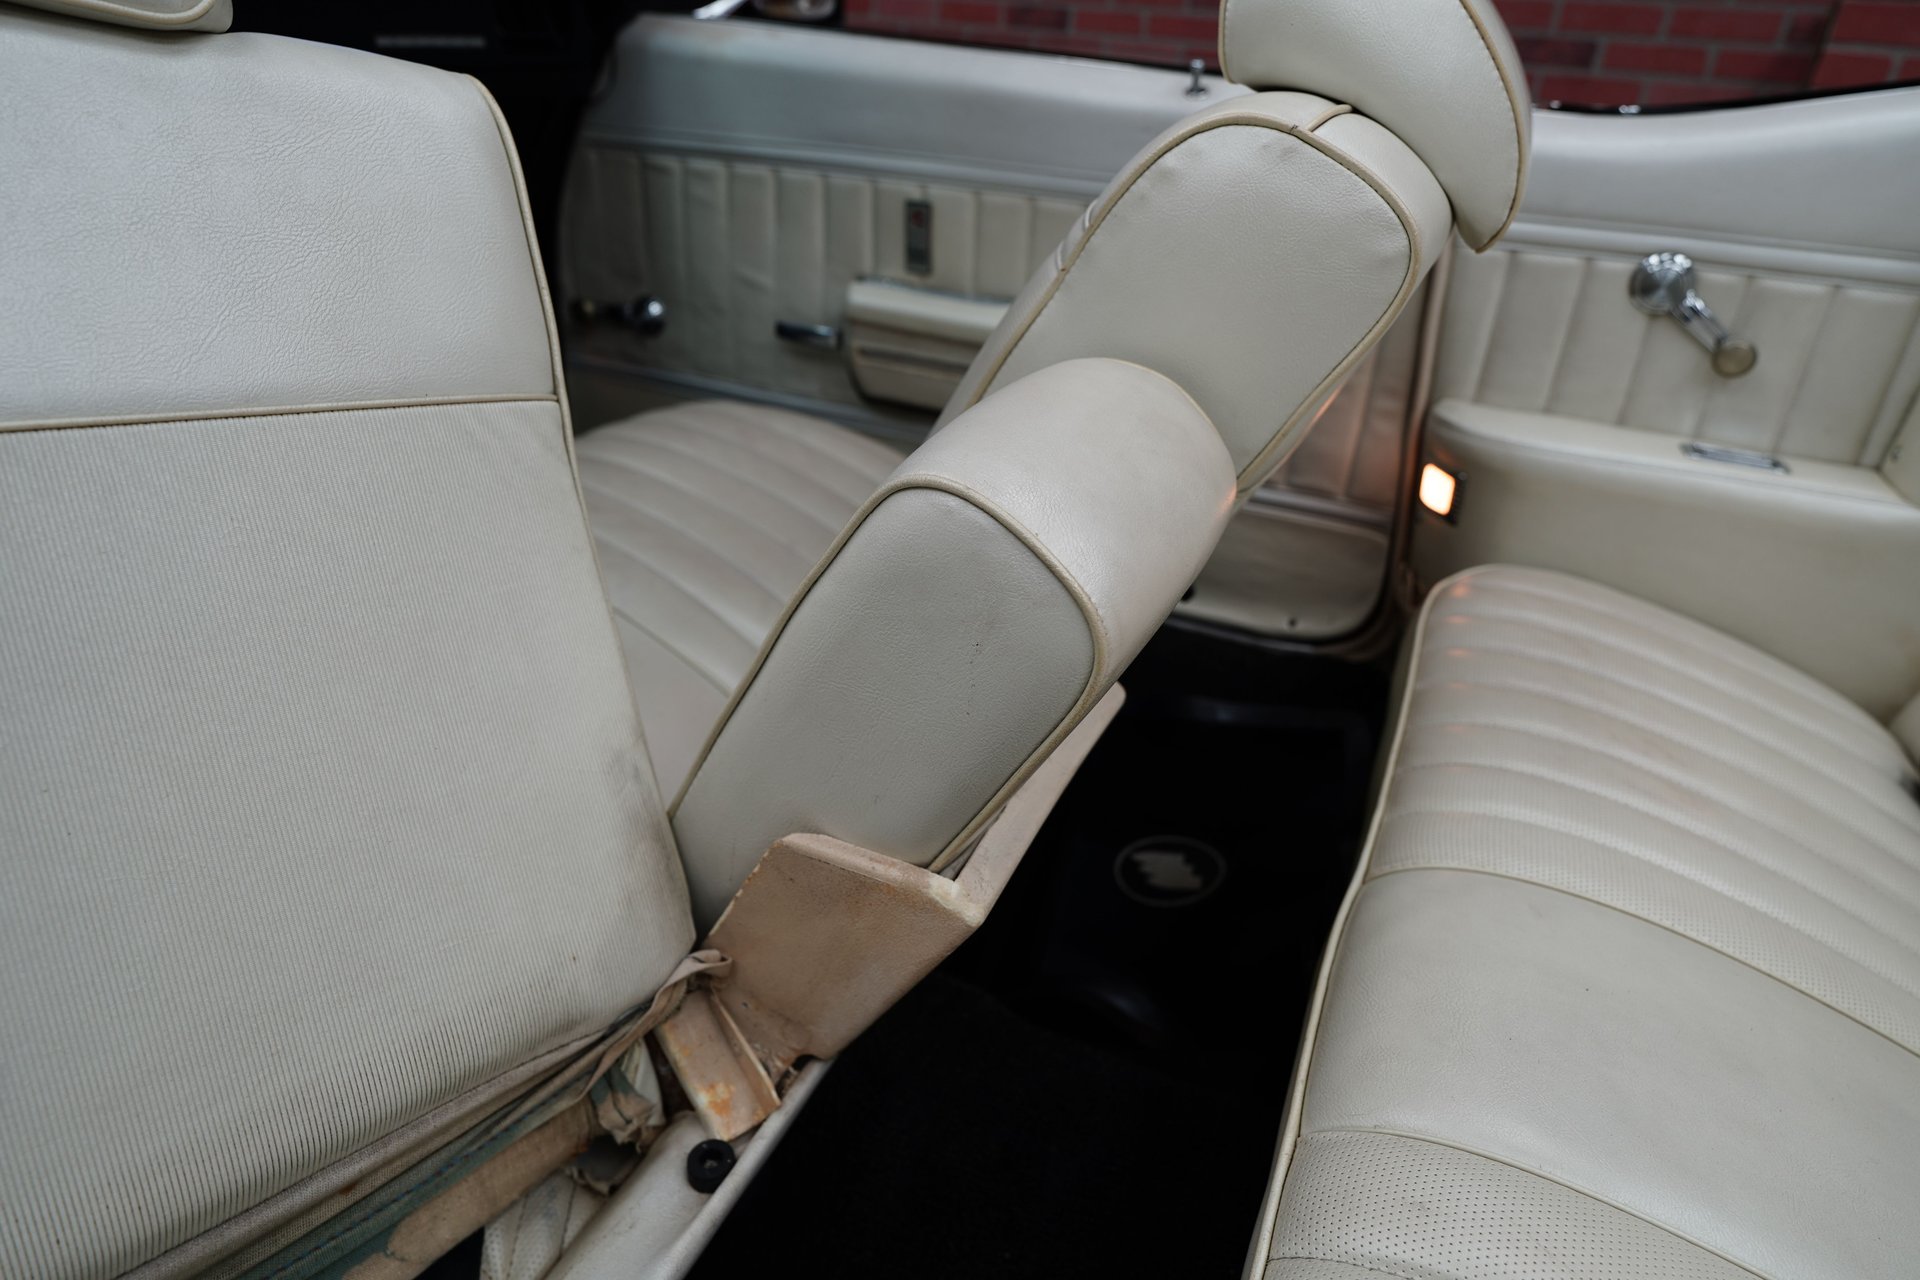 1971 buick skylark custom